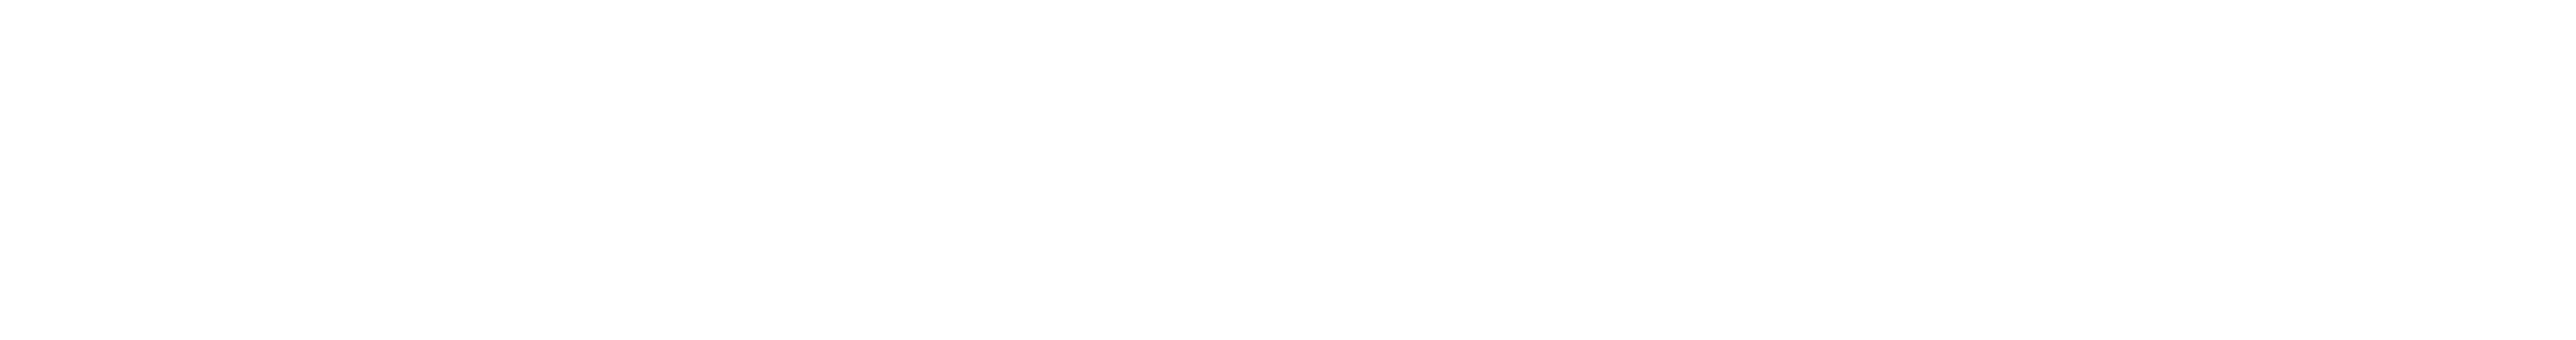 momentum logo new